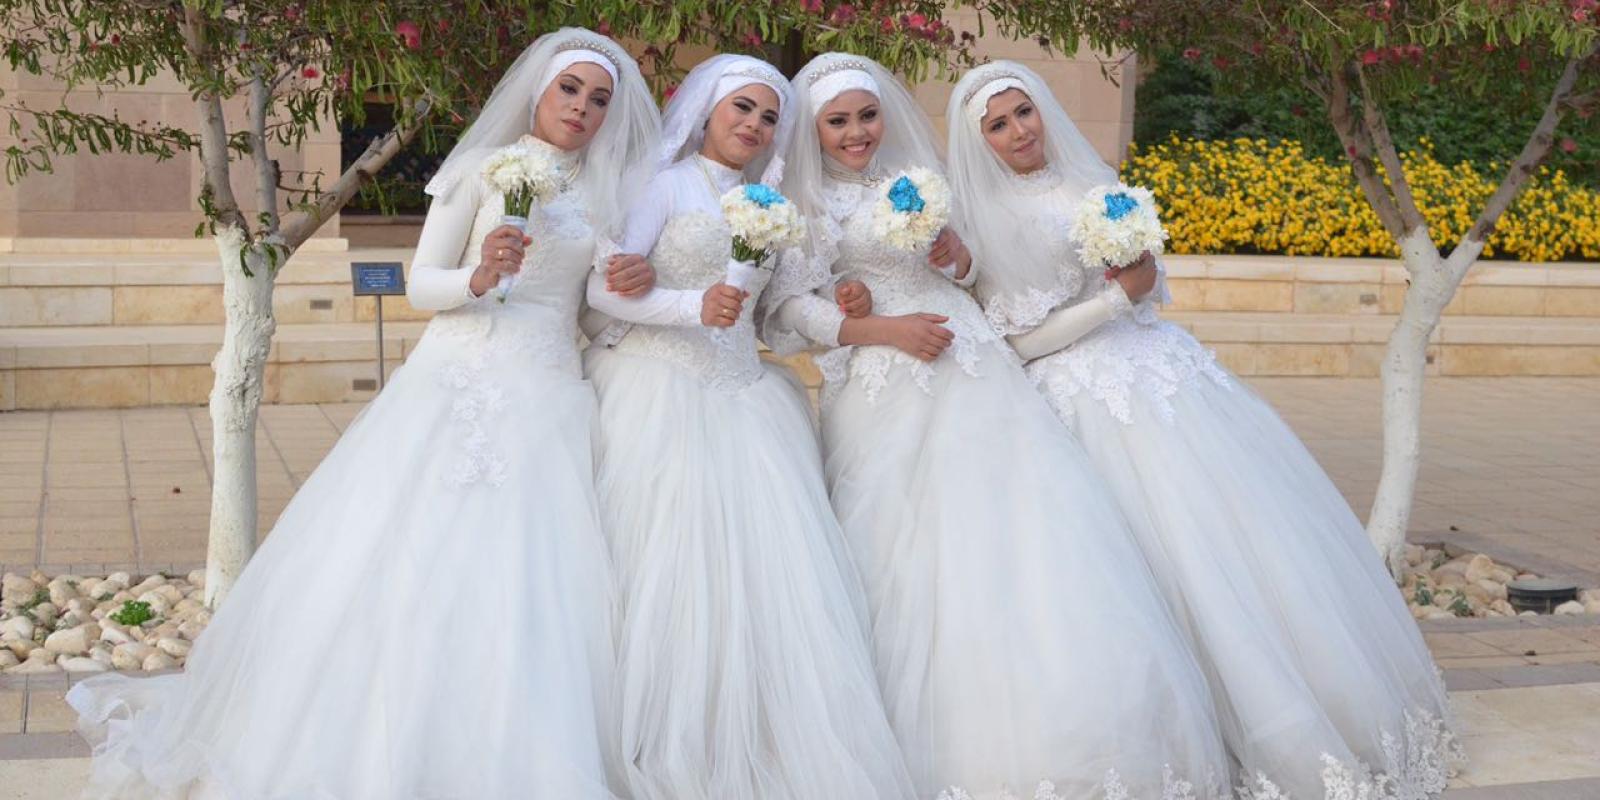 Group Wedding For Orphan Brides